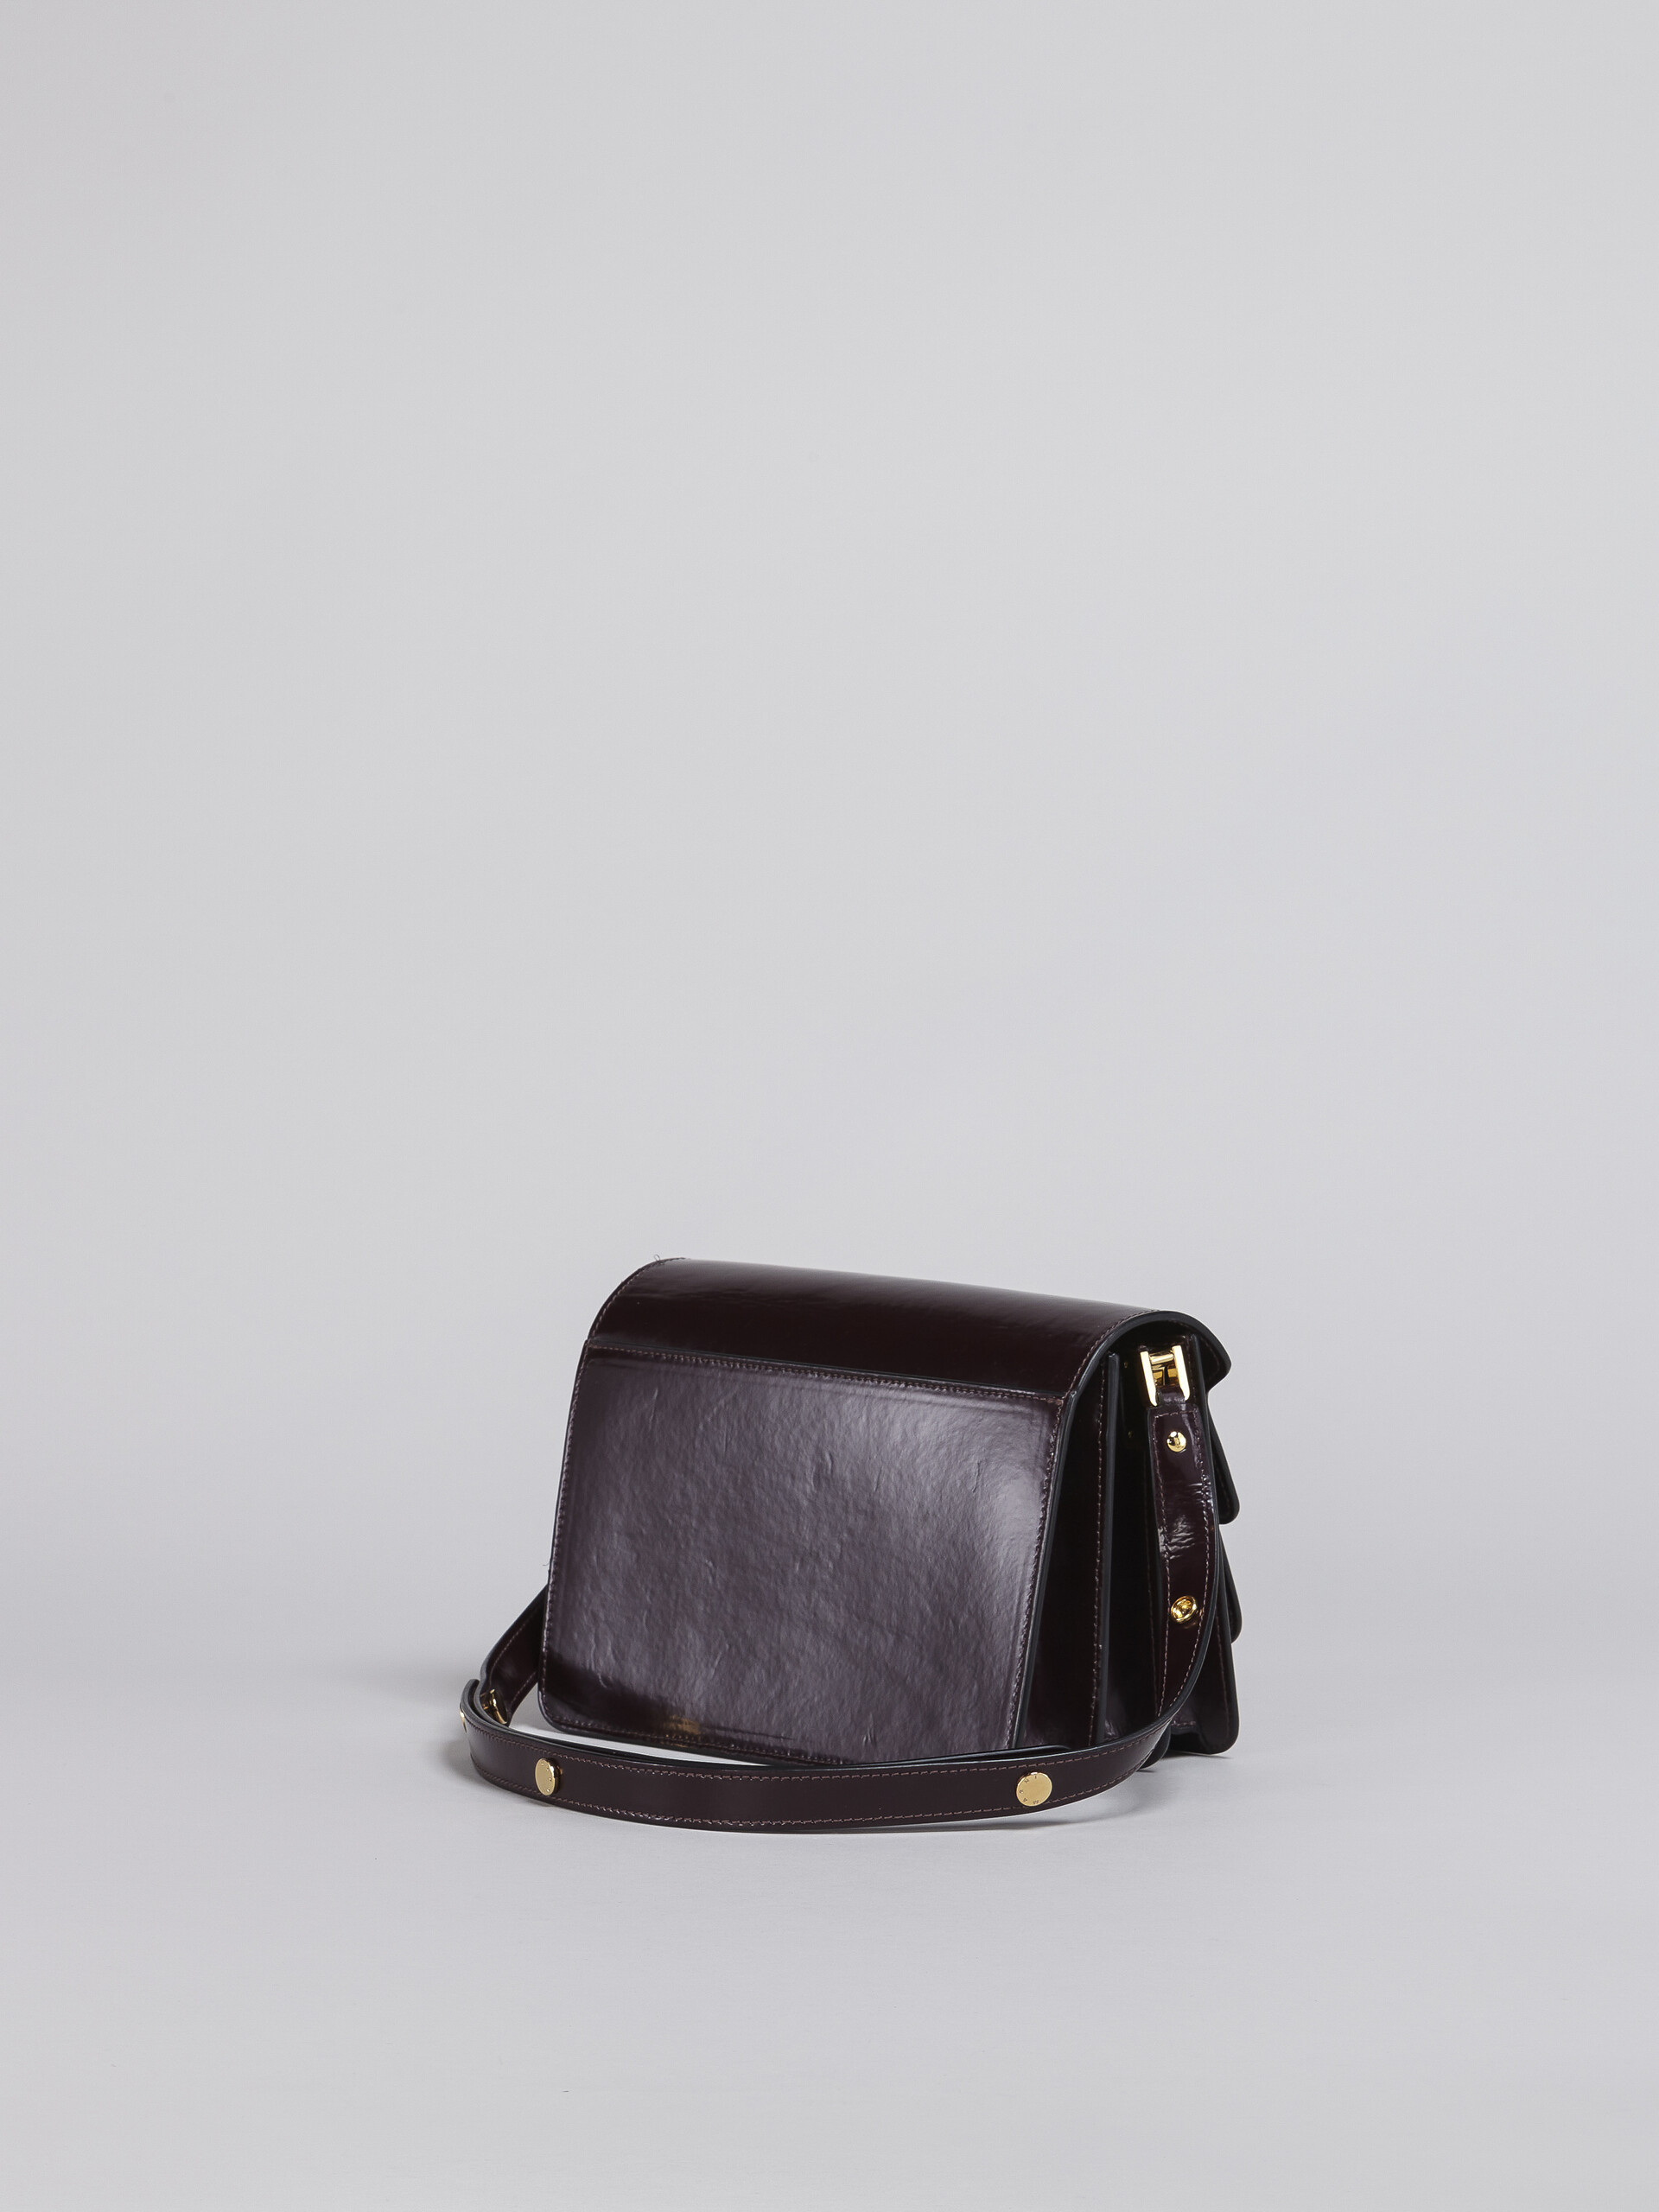 Marni Tricolor Leather Medium Trunk Bag